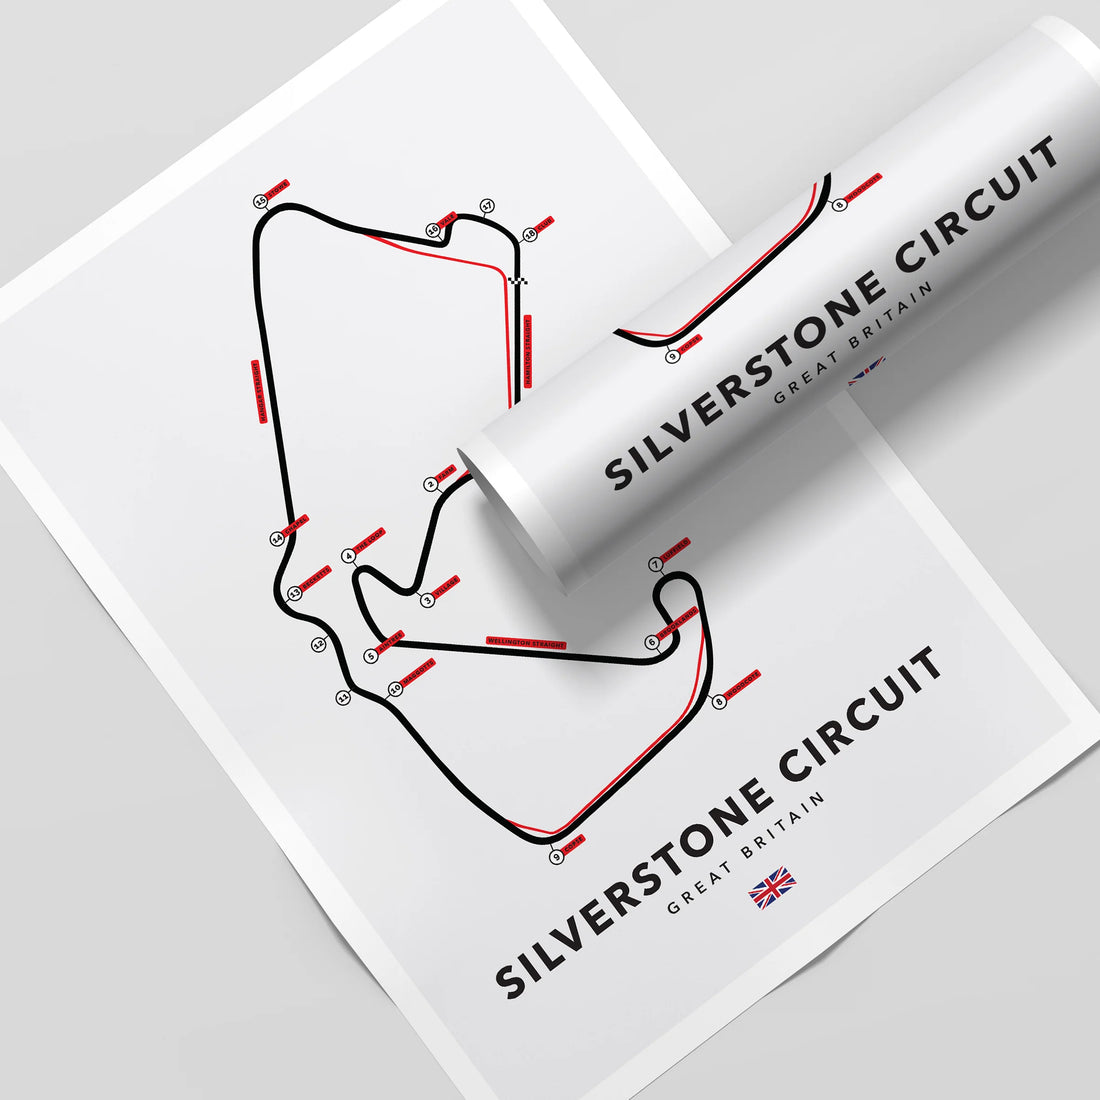 Silverstone British Racing Circuit Print